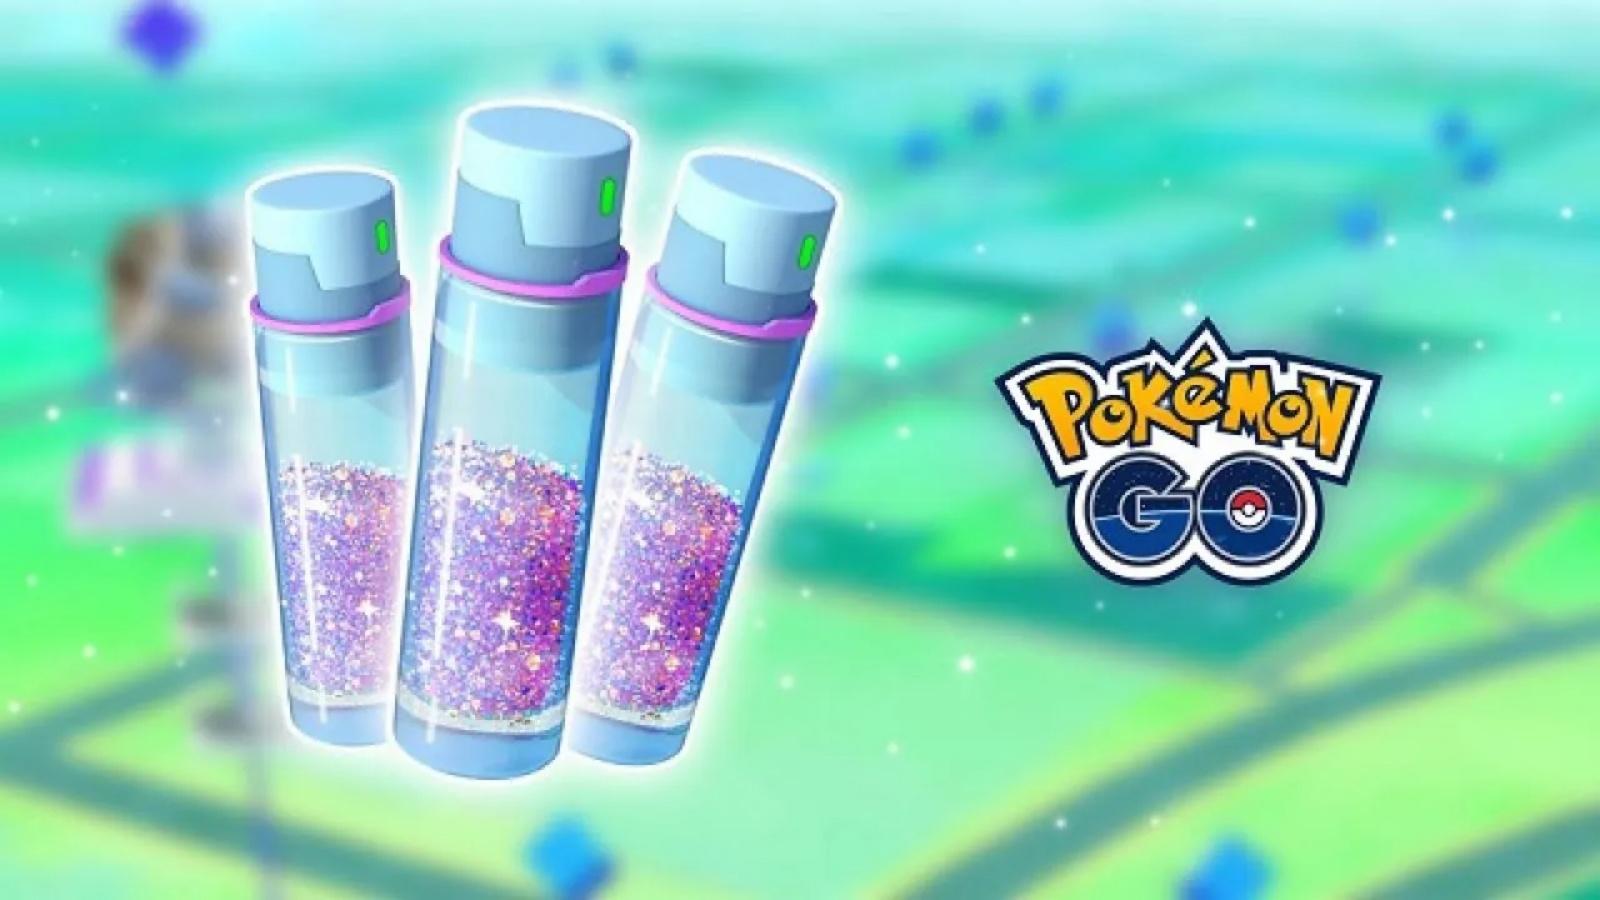 Pokémon GO - Evento Ultrabônus: Paldea